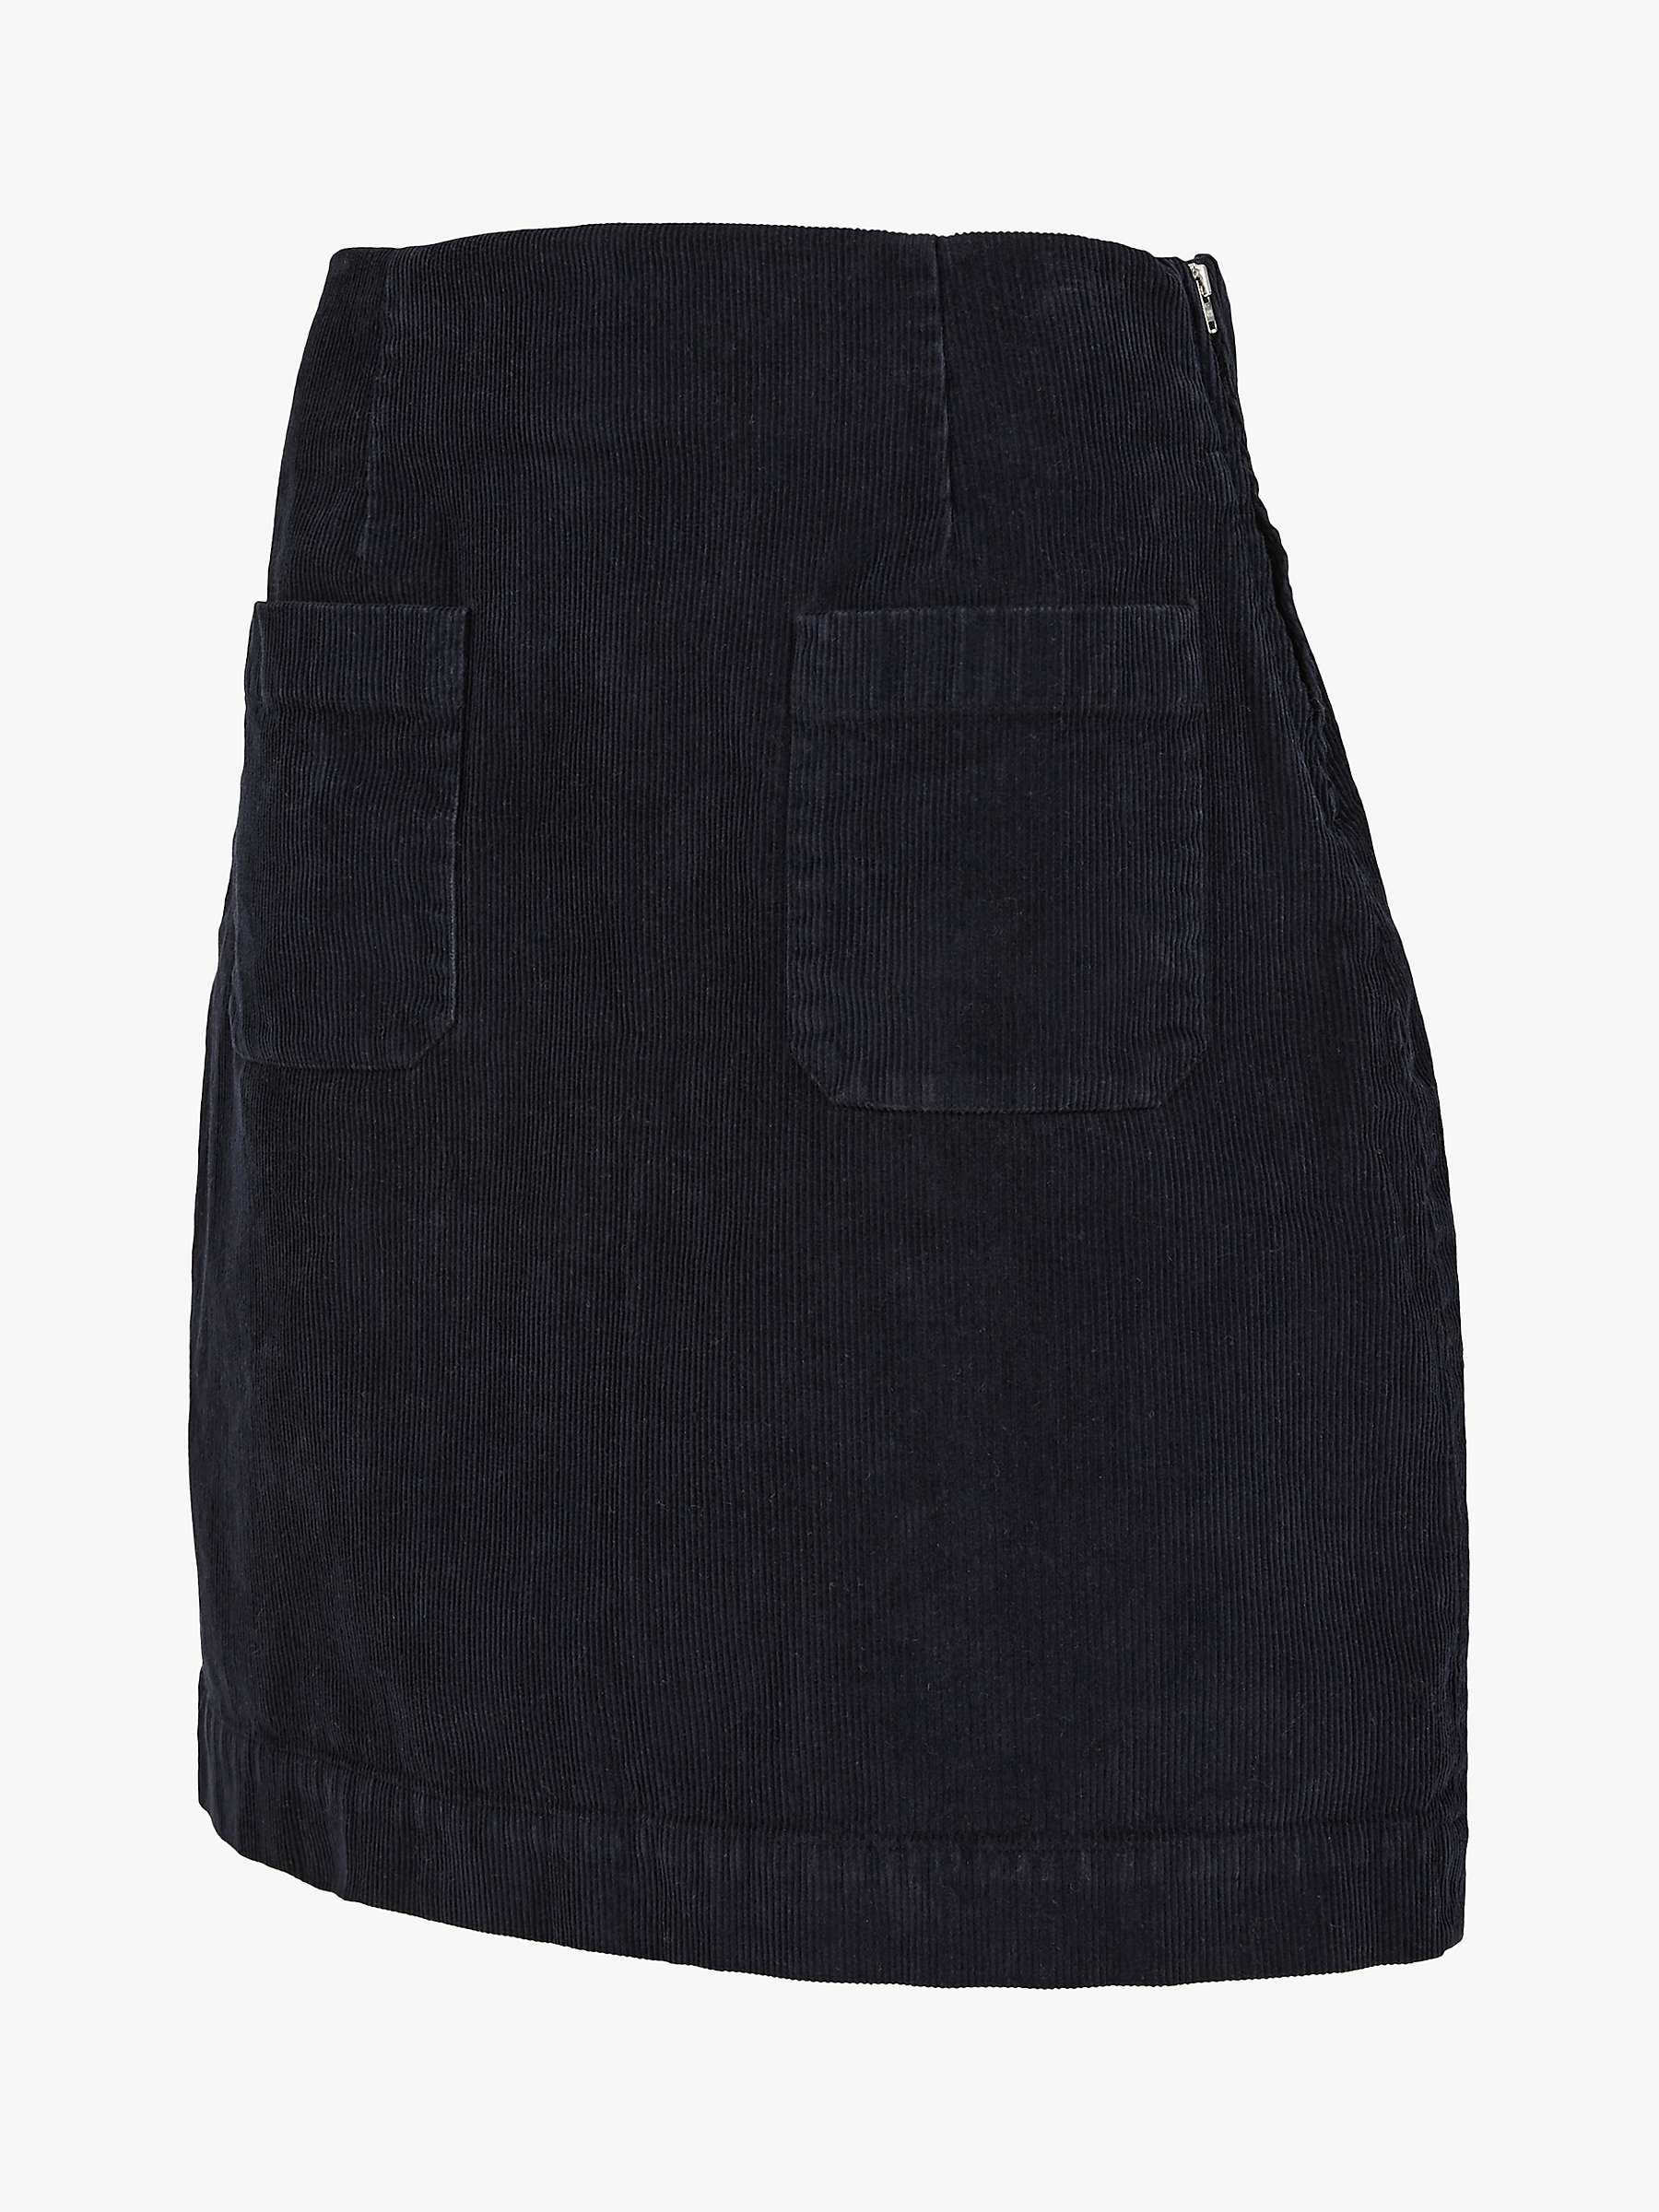 Buy Celtic & Co. Cotton Corduroy Knee Length Skirt, Dark Navy Online at johnlewis.com